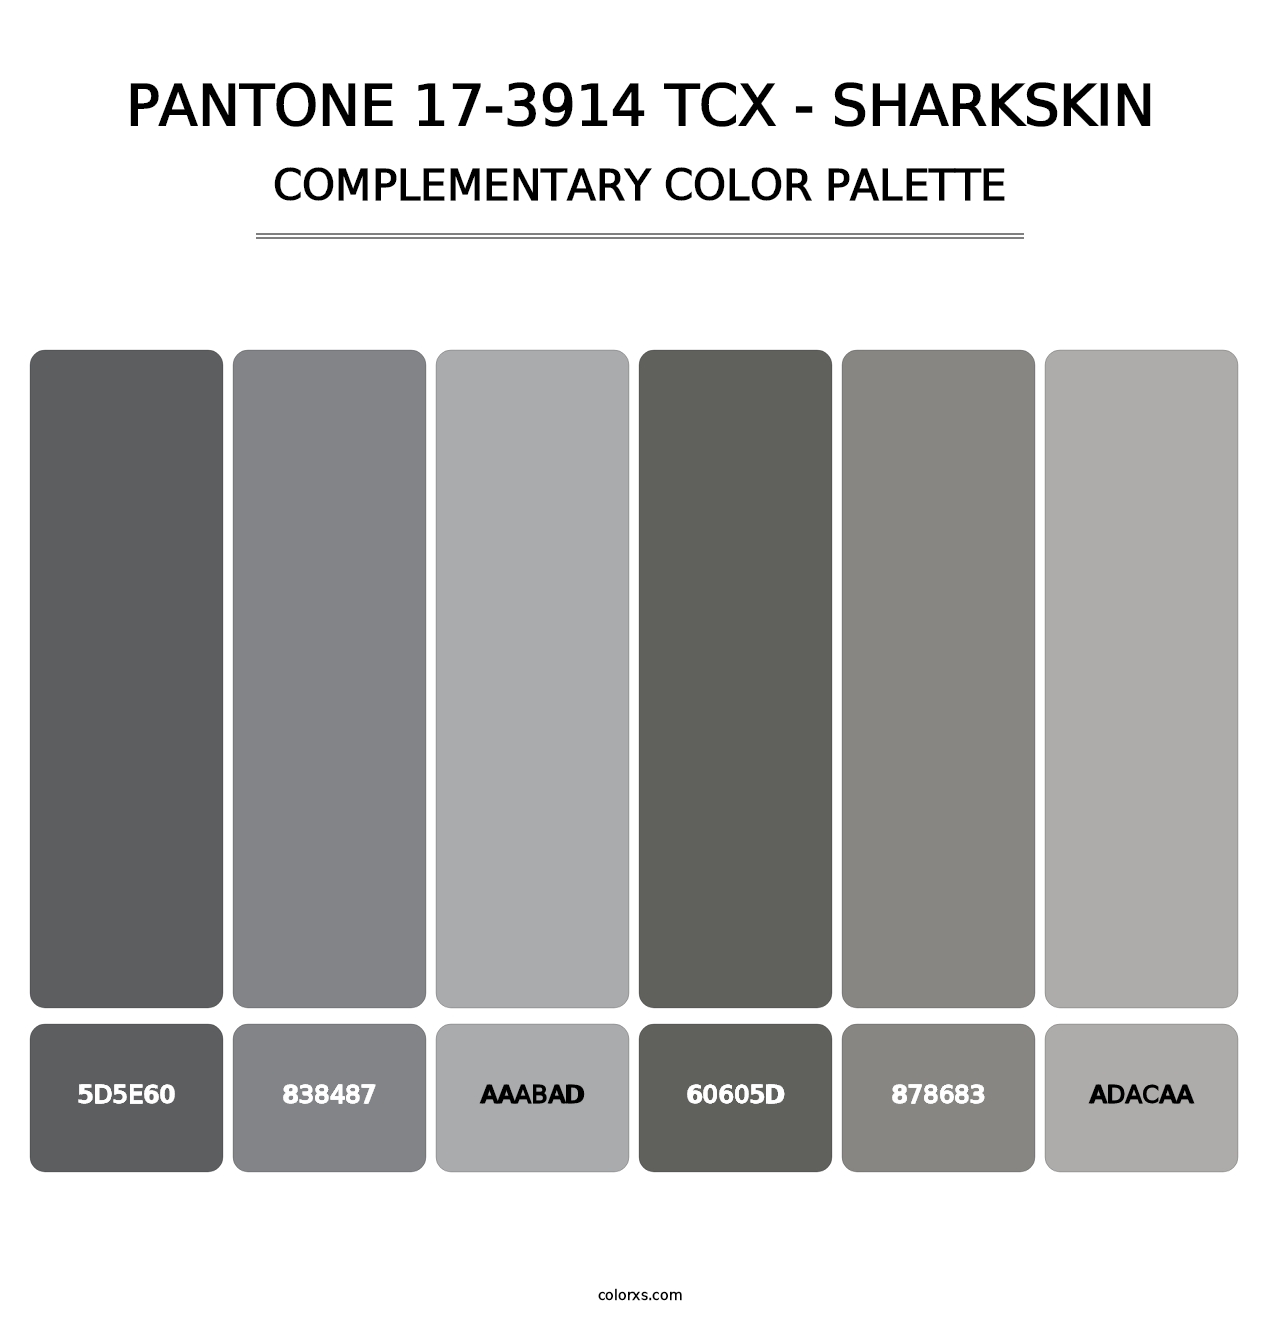 PANTONE 17-3914 TCX - Sharkskin - Complementary Color Palette